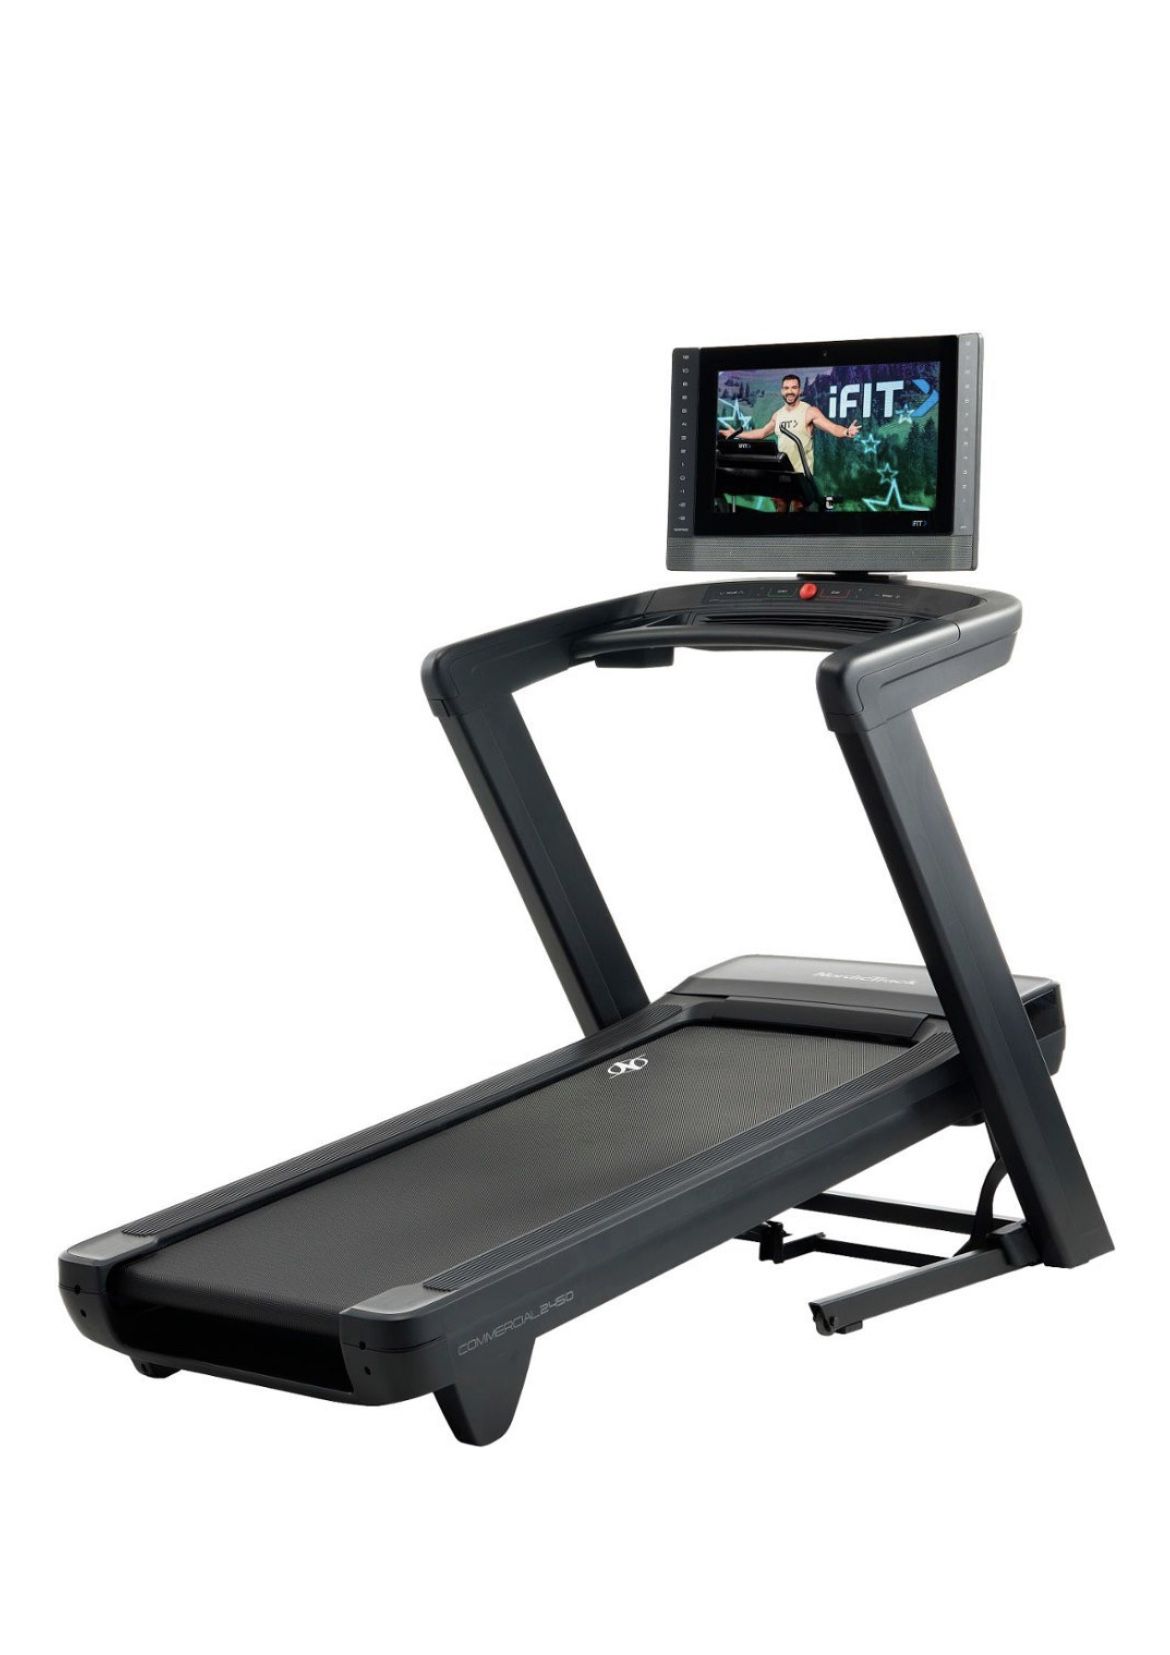 NordicTrack Commercial 2450 Treadmill - Black